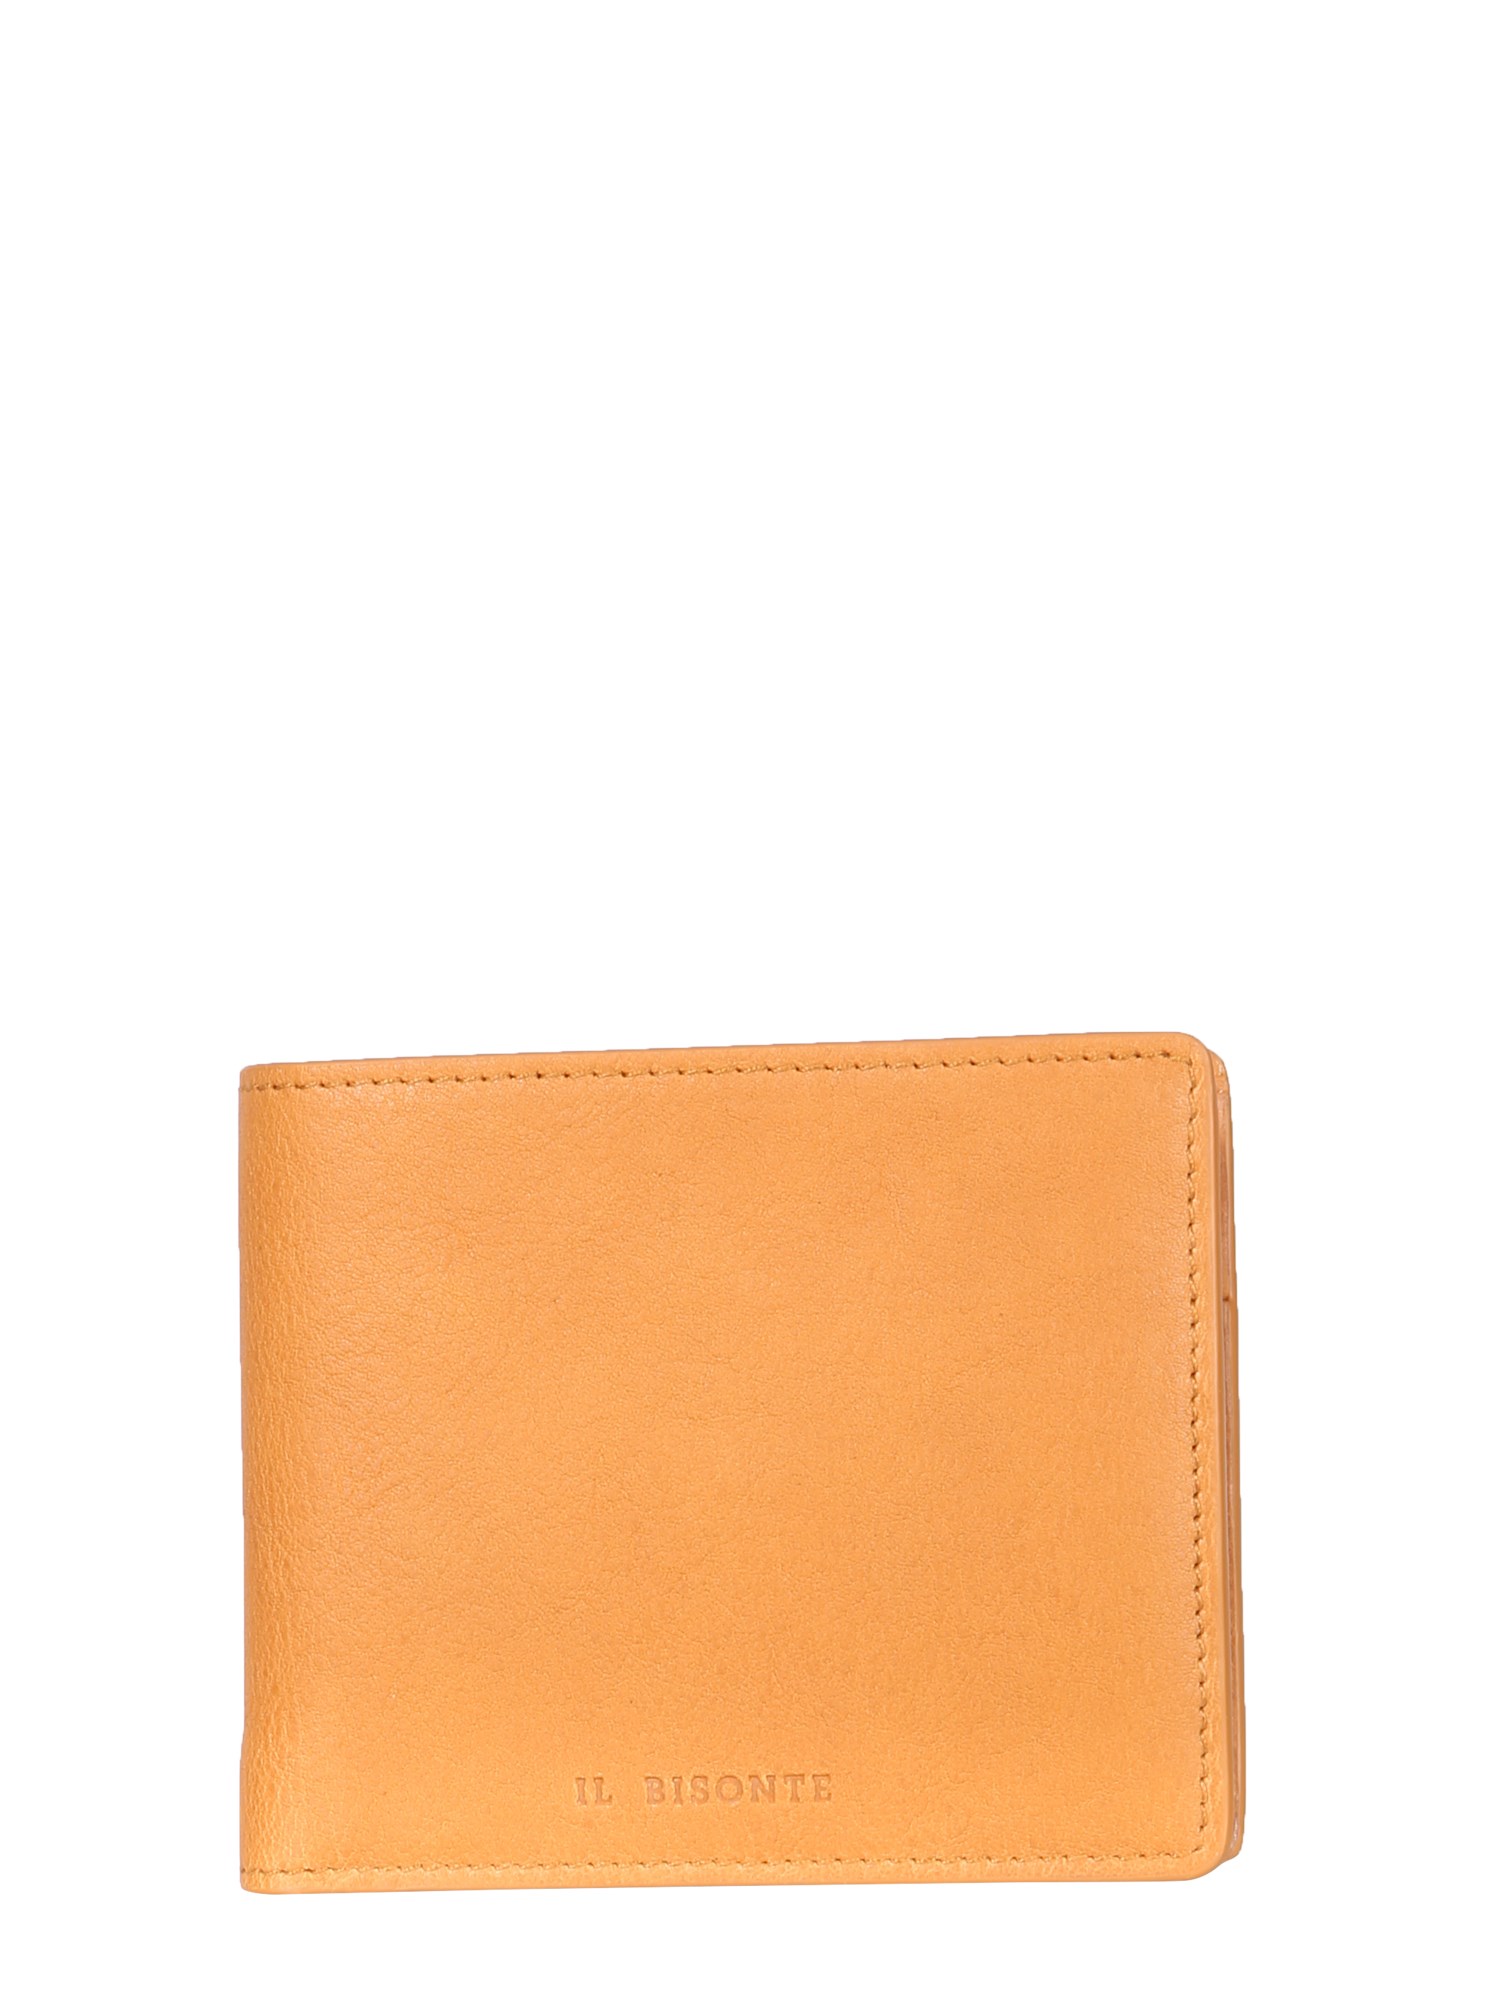 il bisonte leather bifold wallet